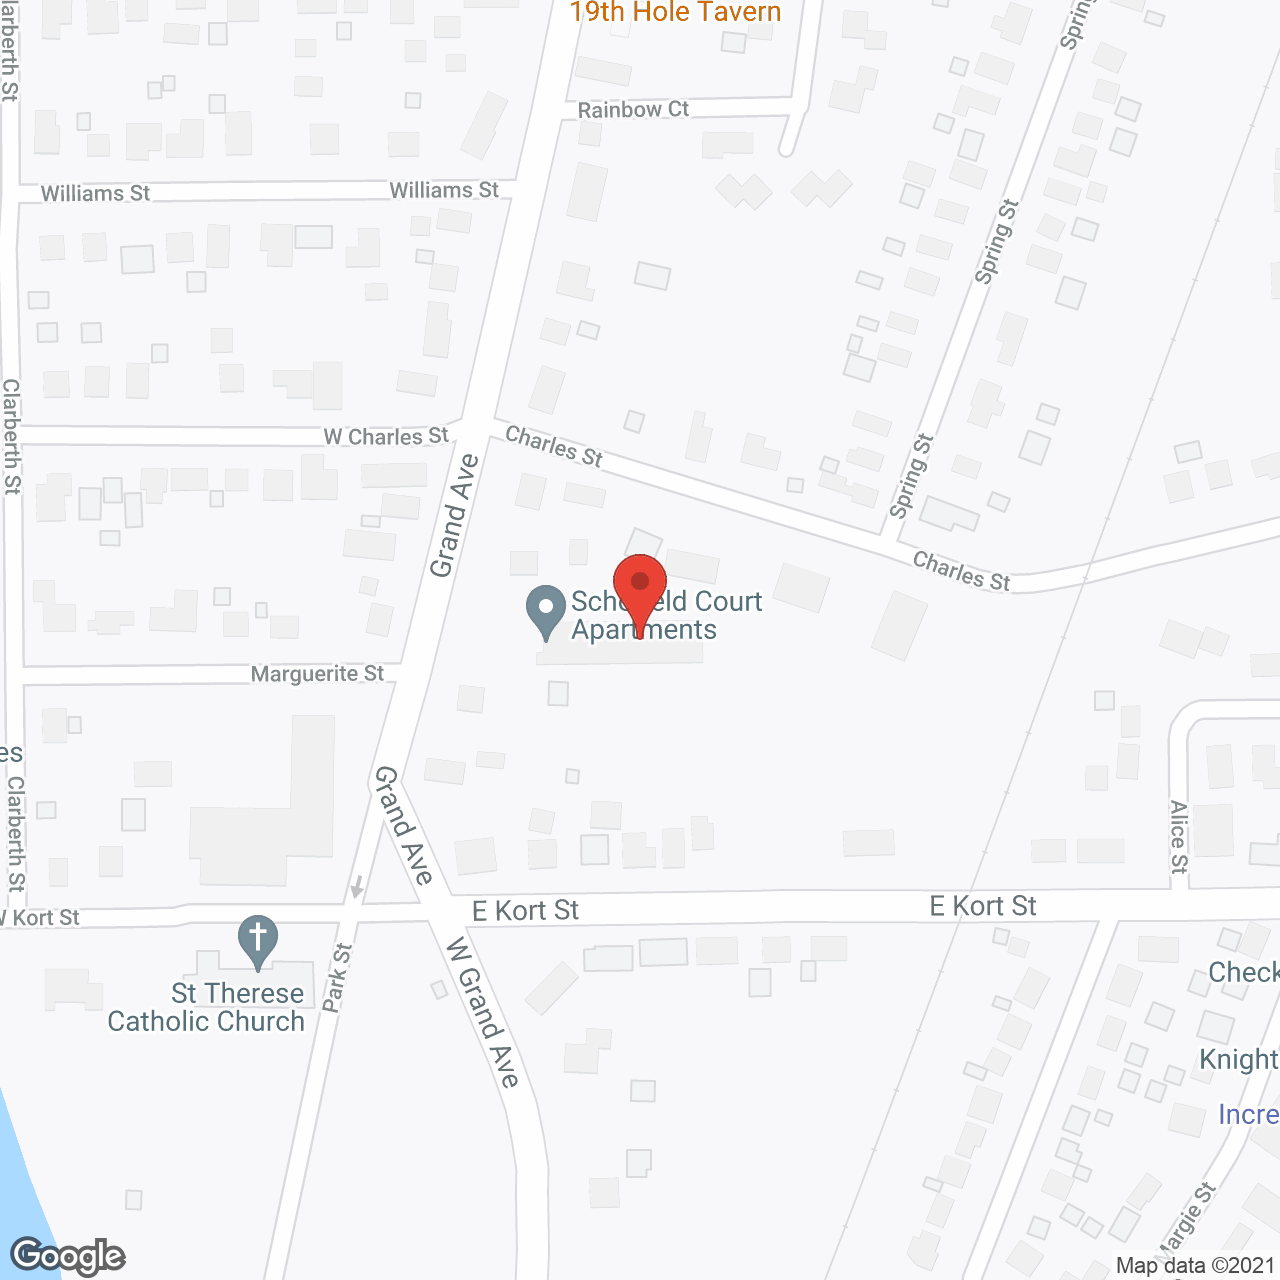 Schofield Court in google map